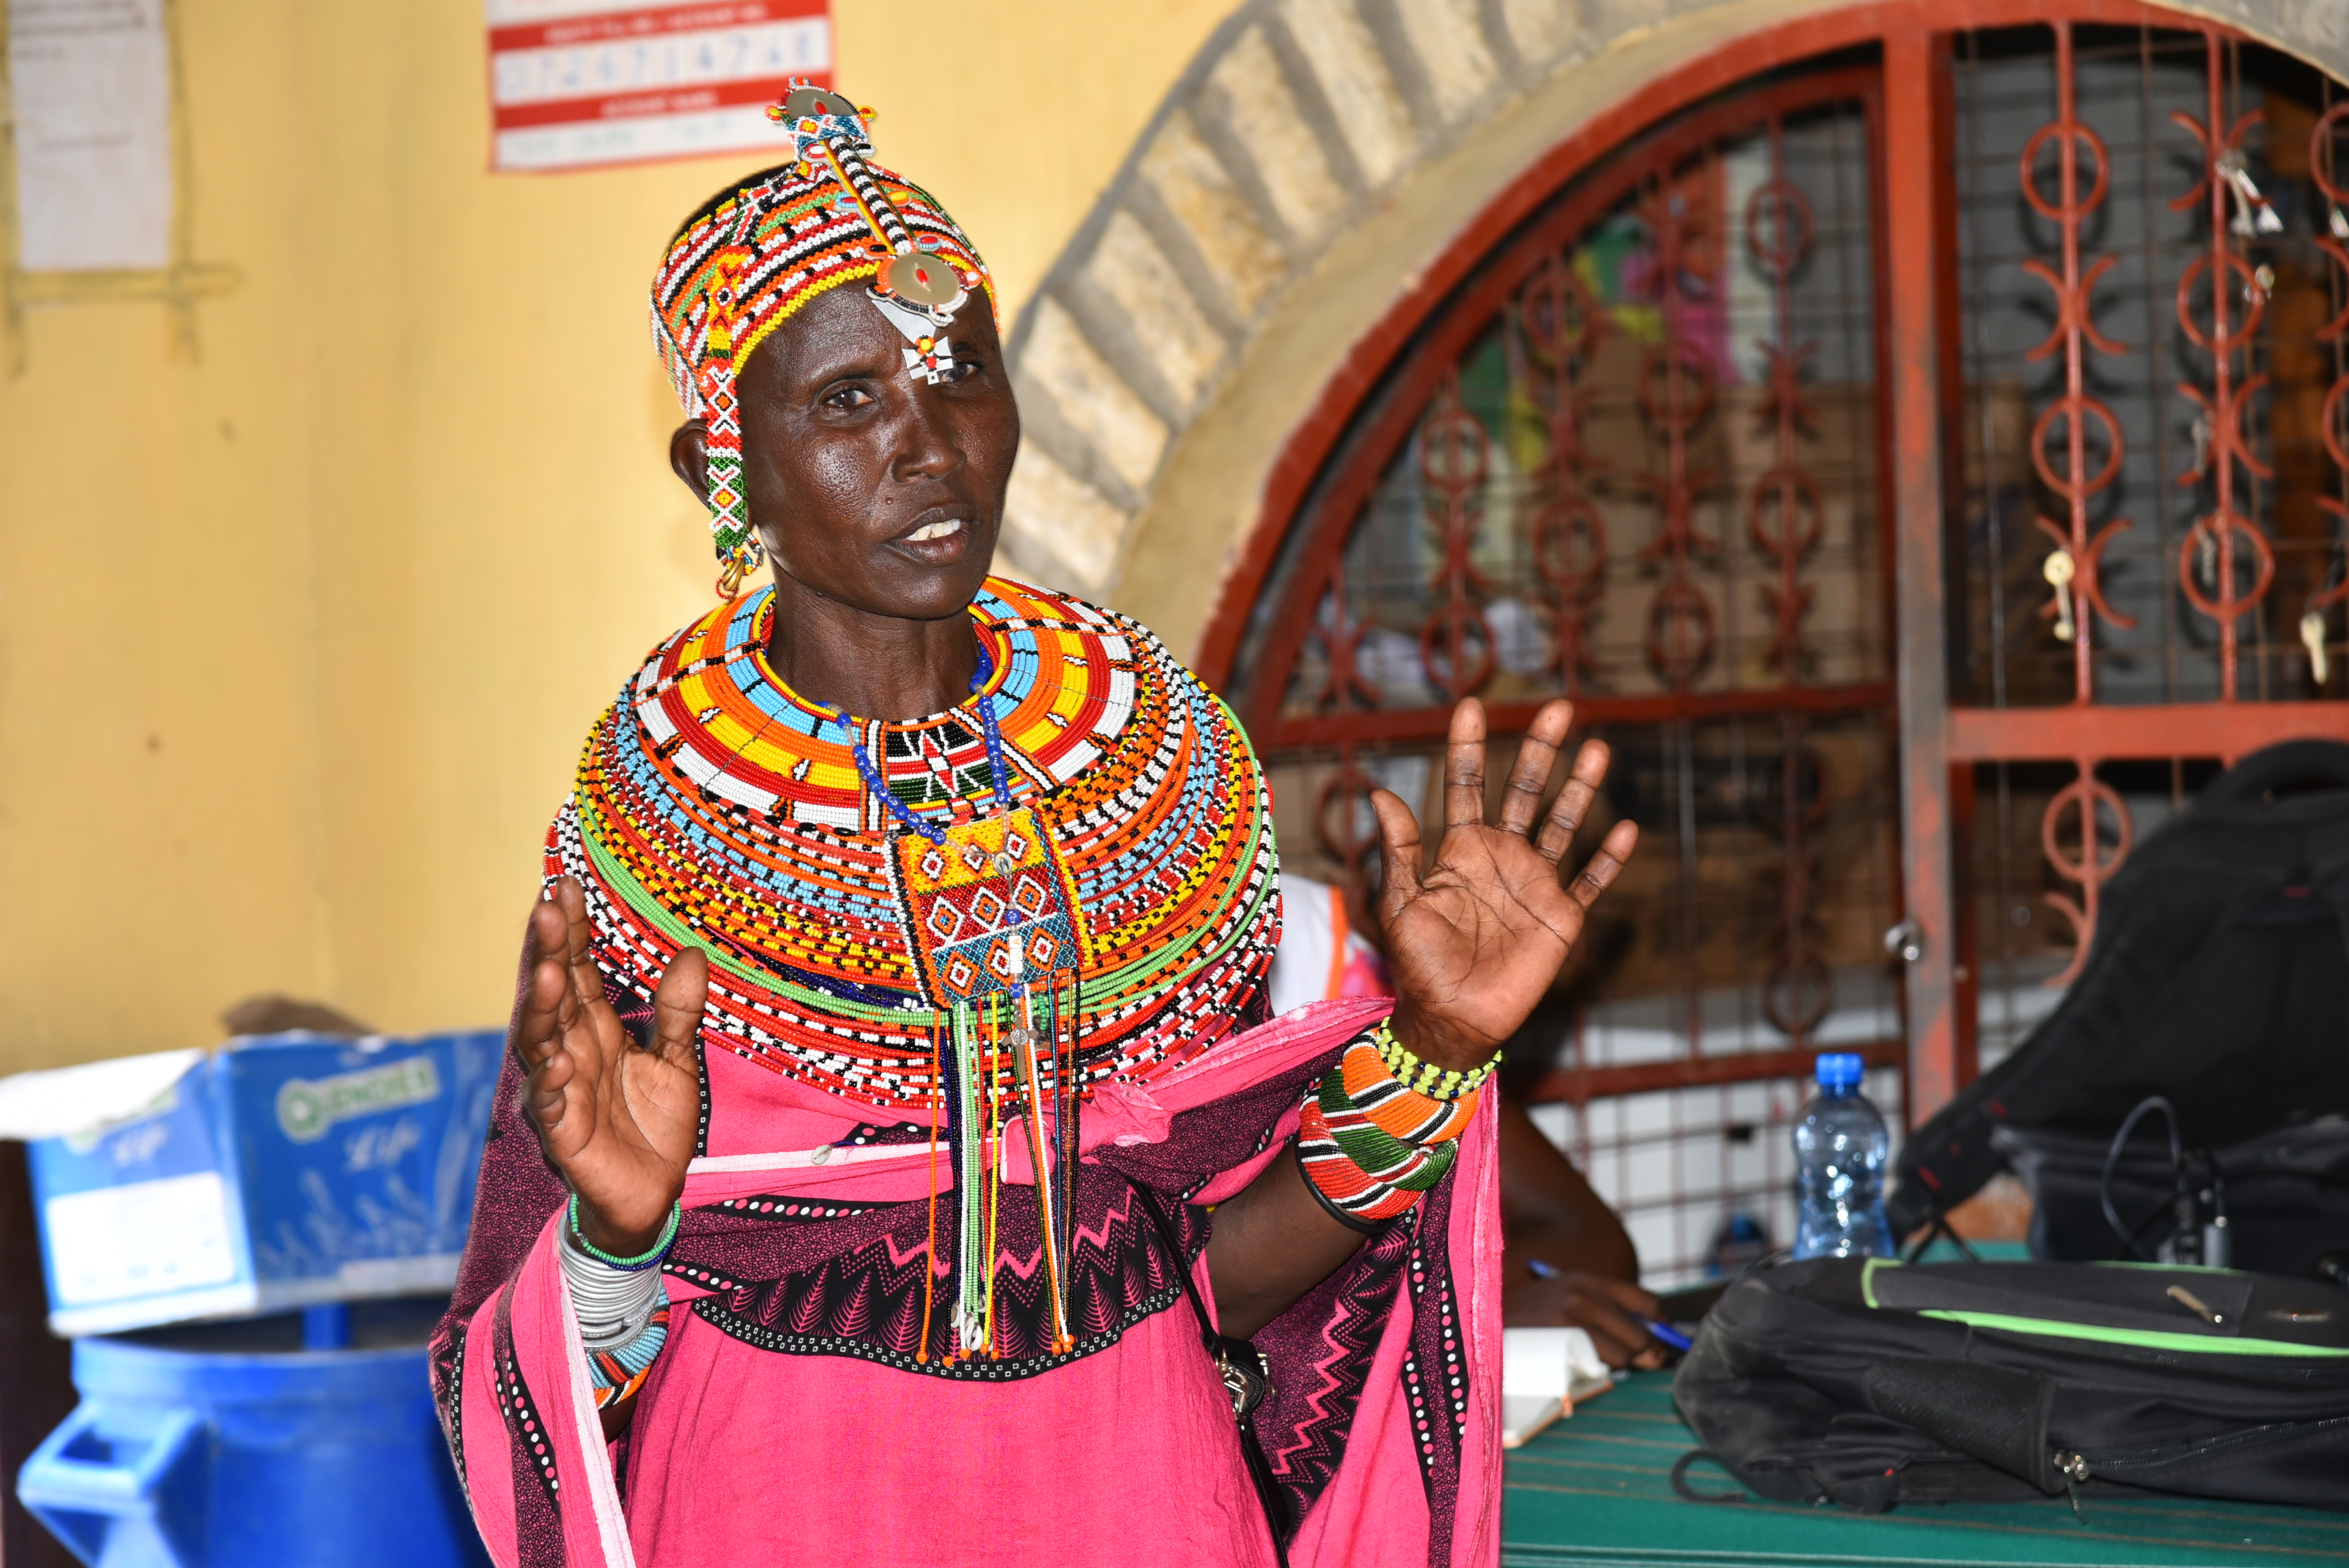 Community sensitization activities in Loiyangalani are giving women a chance to raise issues of GBV publicly. Photo: UN Women/Joel Mwamkonu